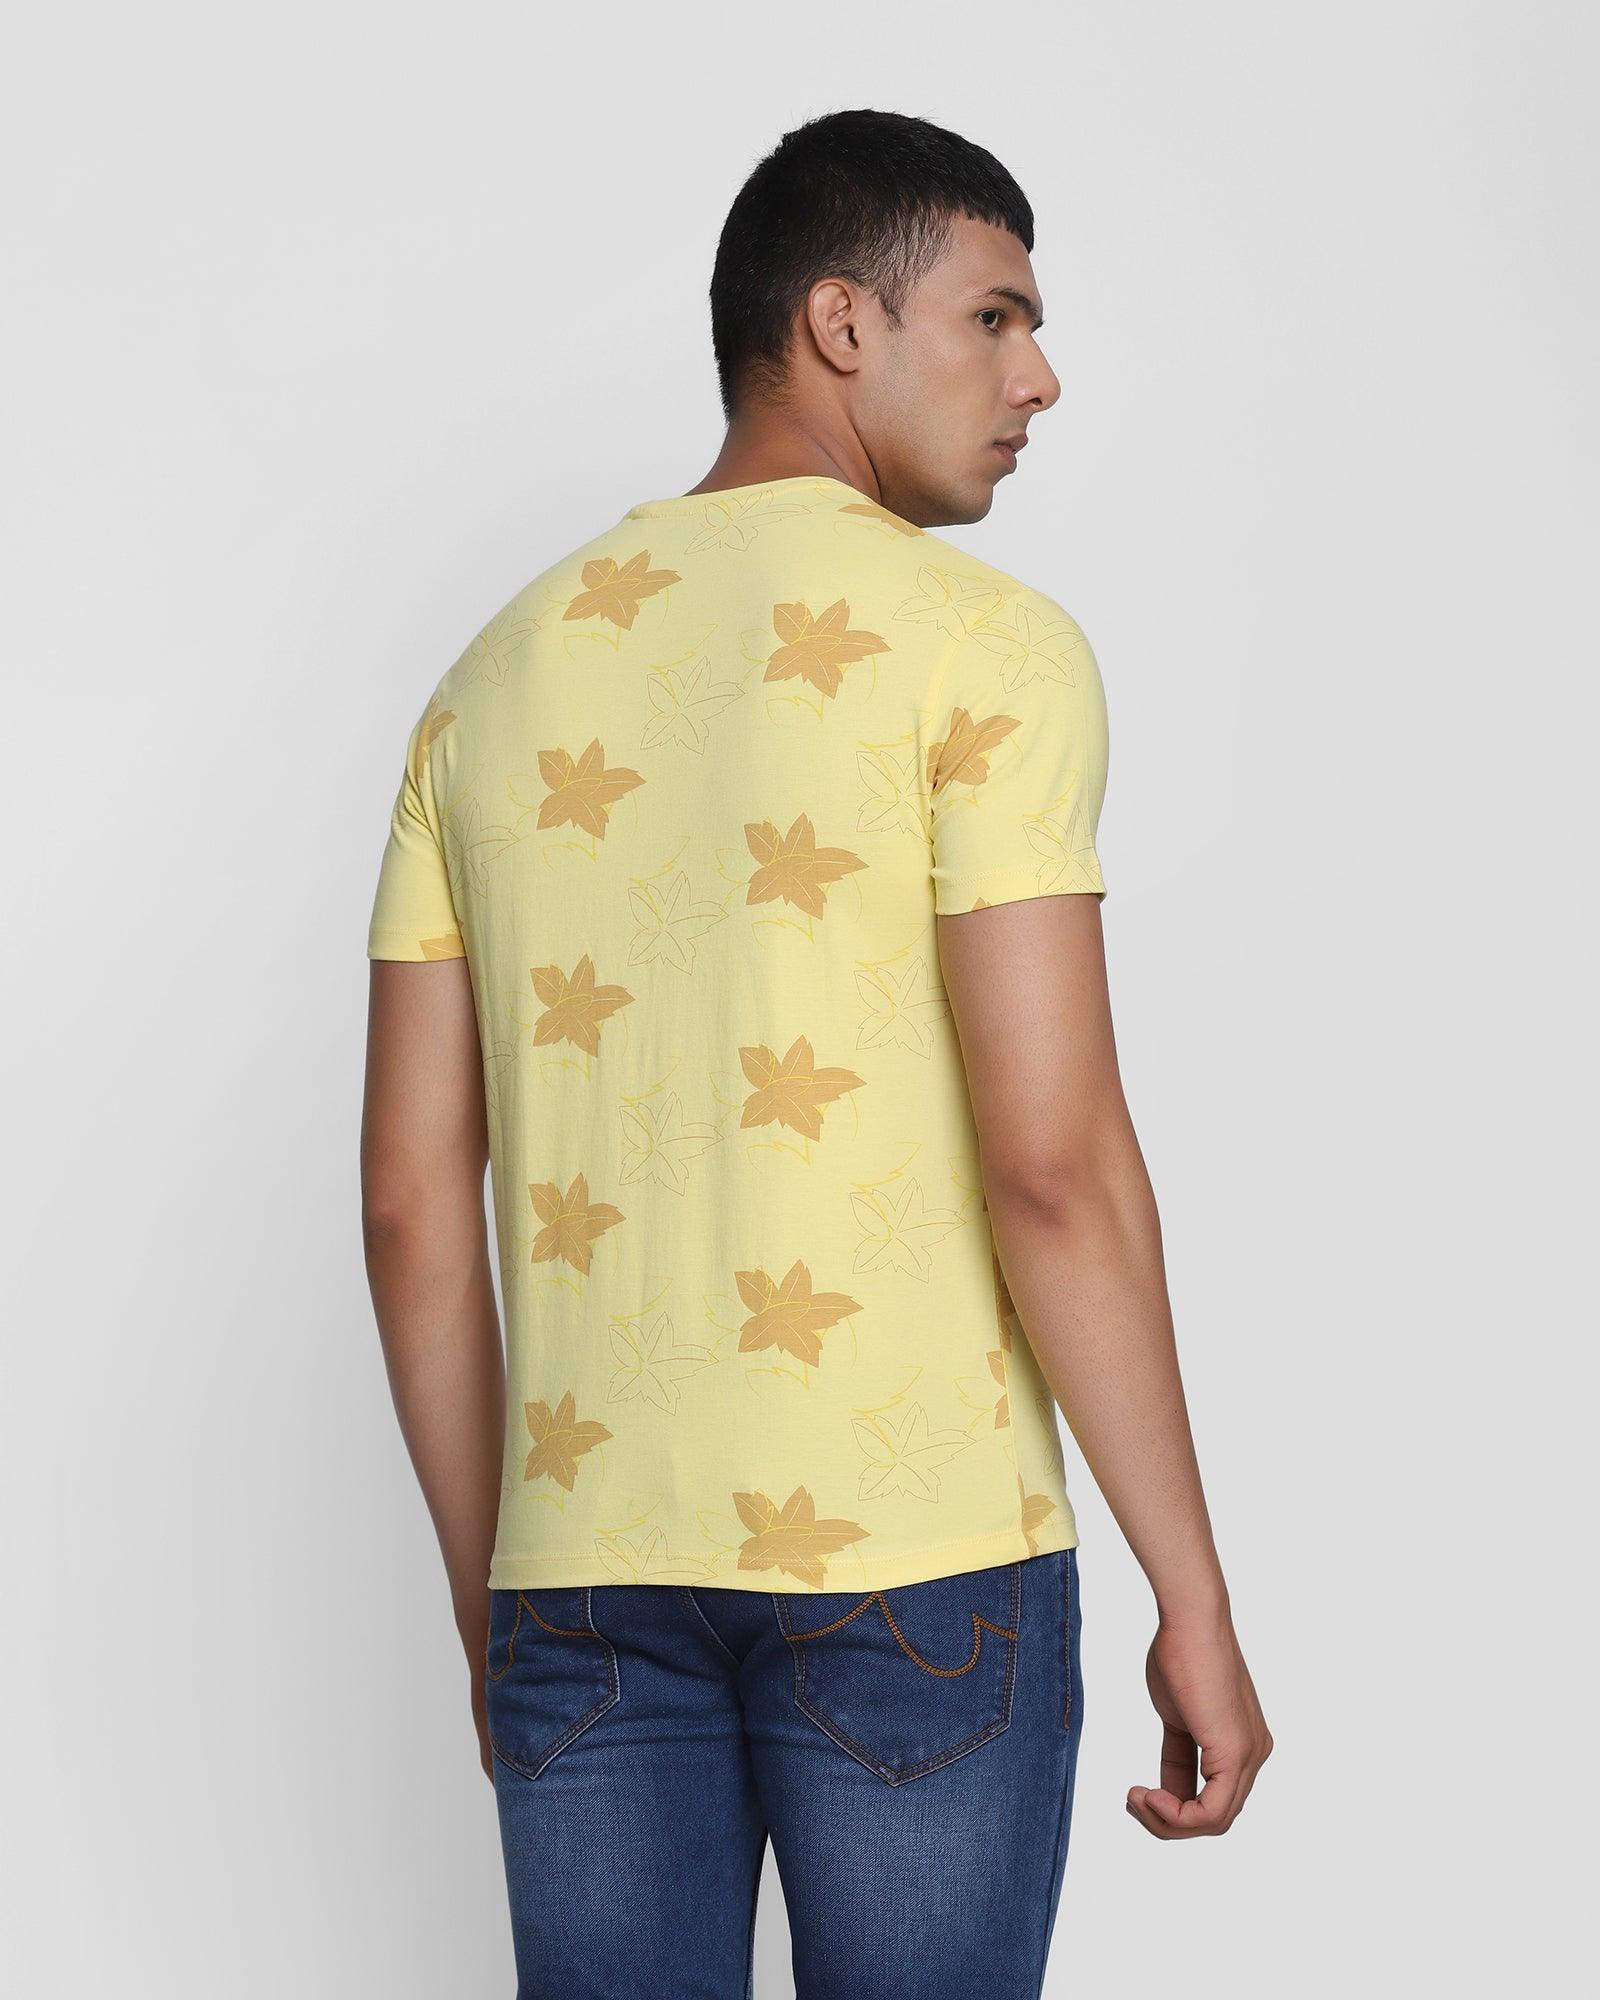 Crew Neck Bright Yellow Printed T Shirt - Pointelle